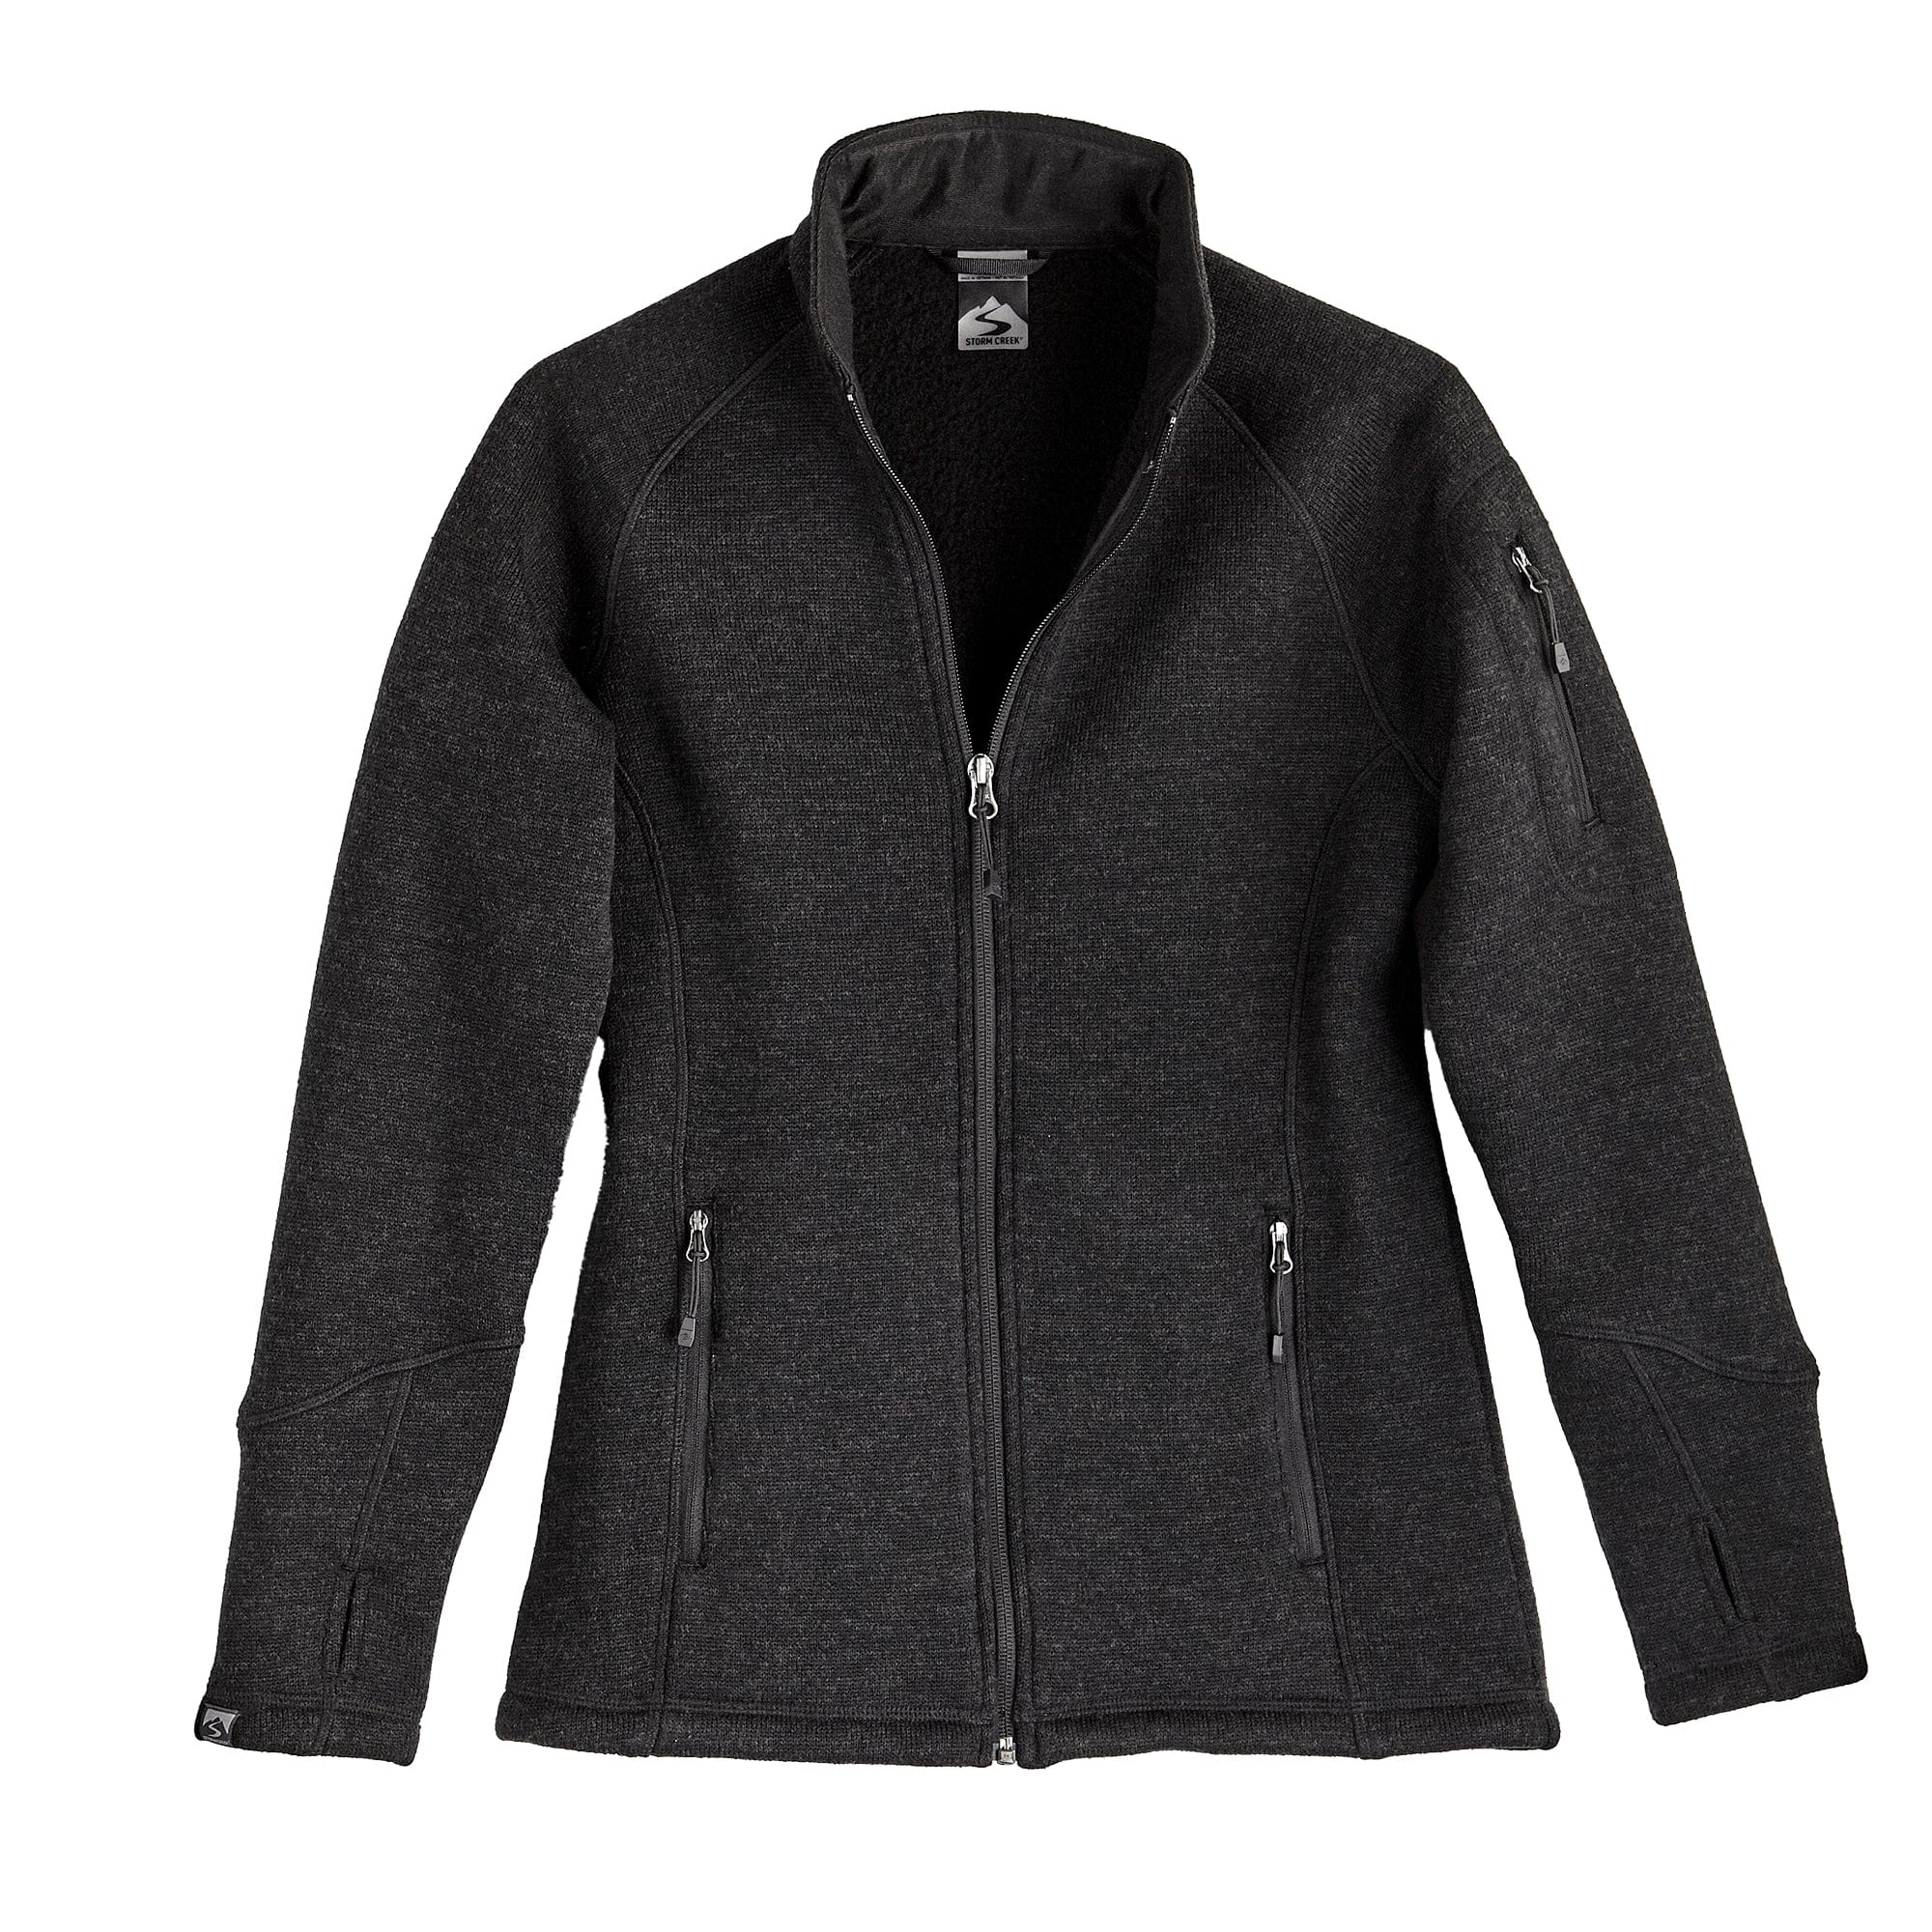 Customizable Storm Creek women's Overachiever sweaterfleece jacket in black.